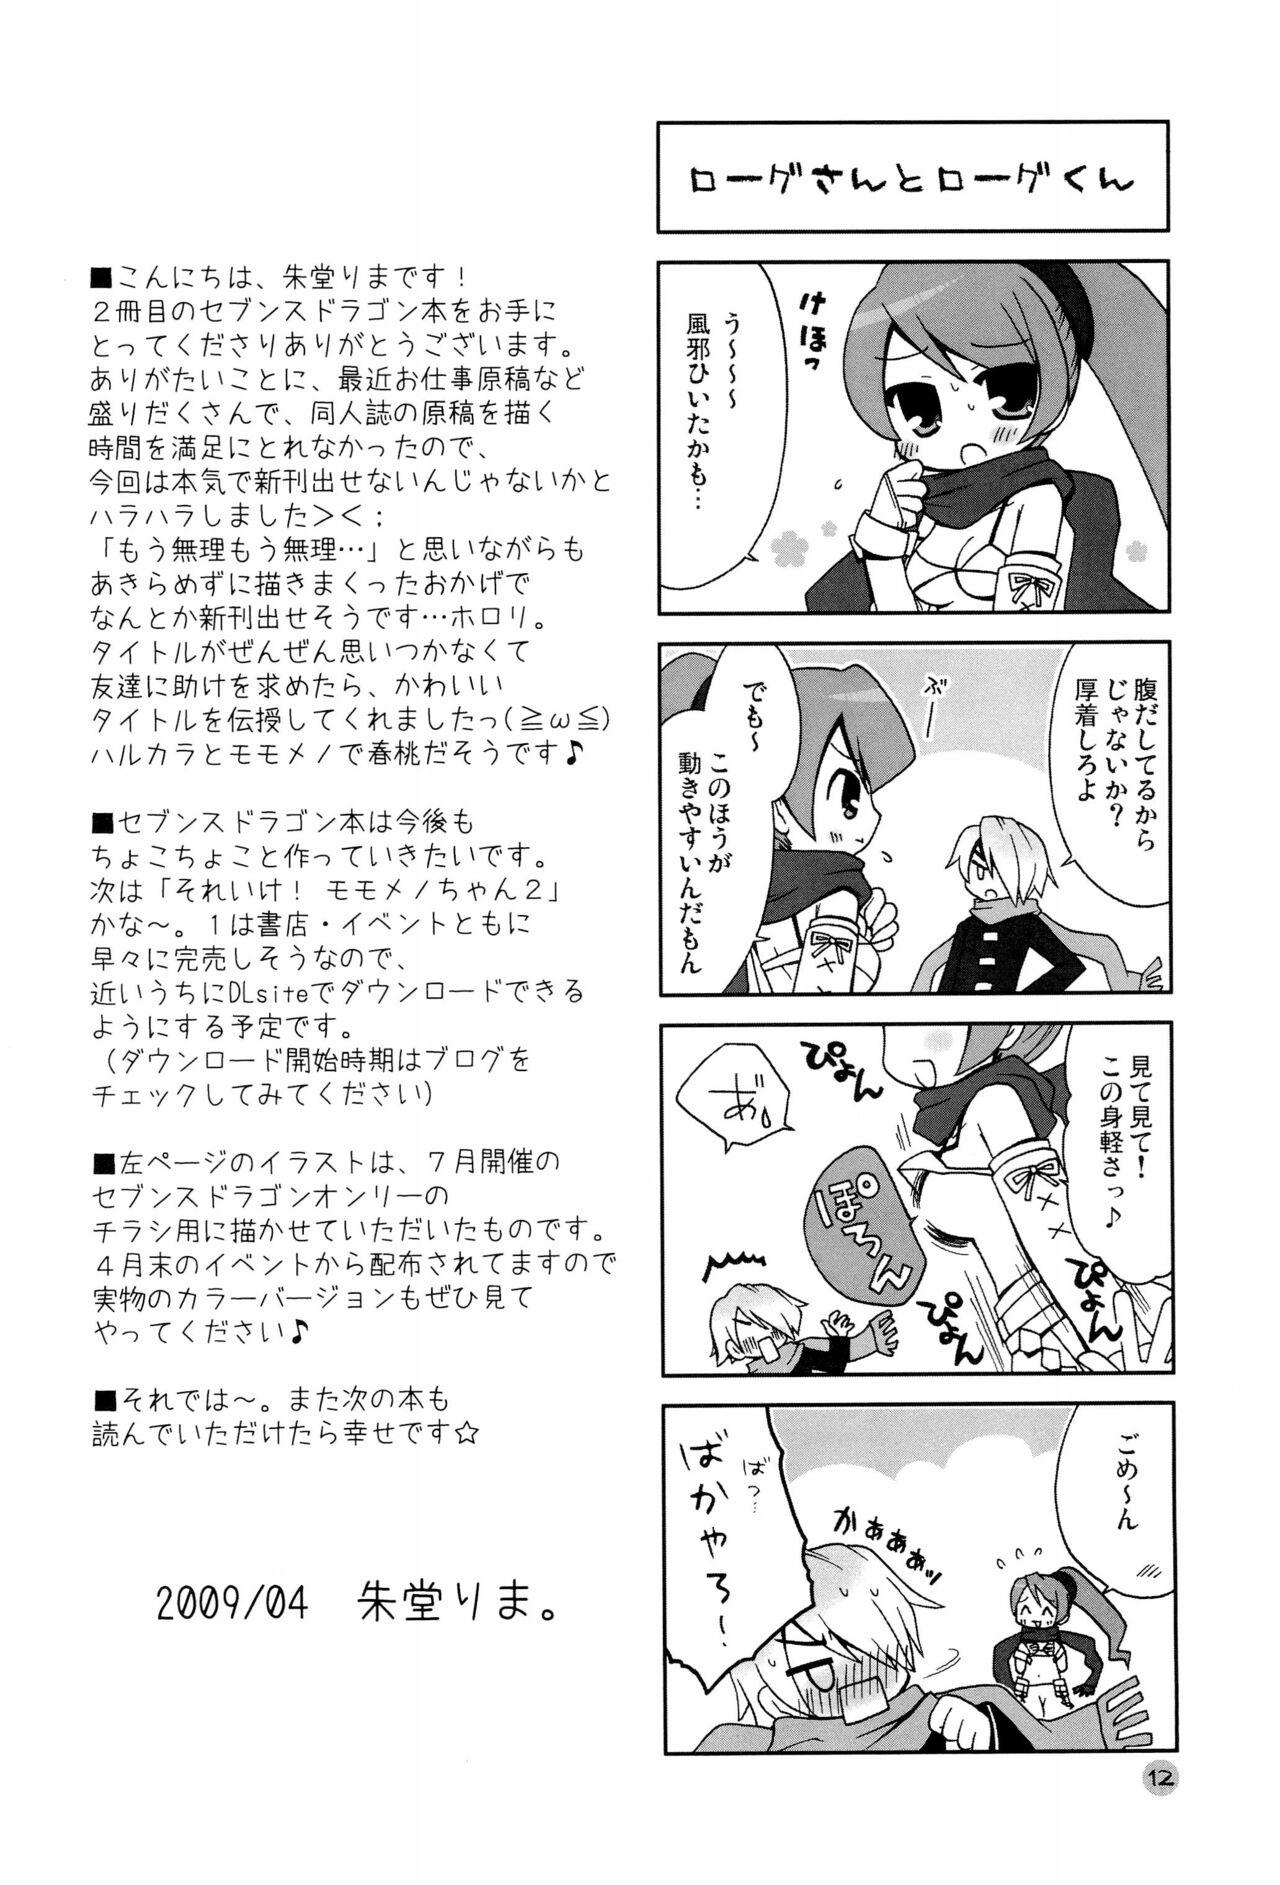 Caliente Harumomo no Tsubomi - 7th dragon Spank - Page 12